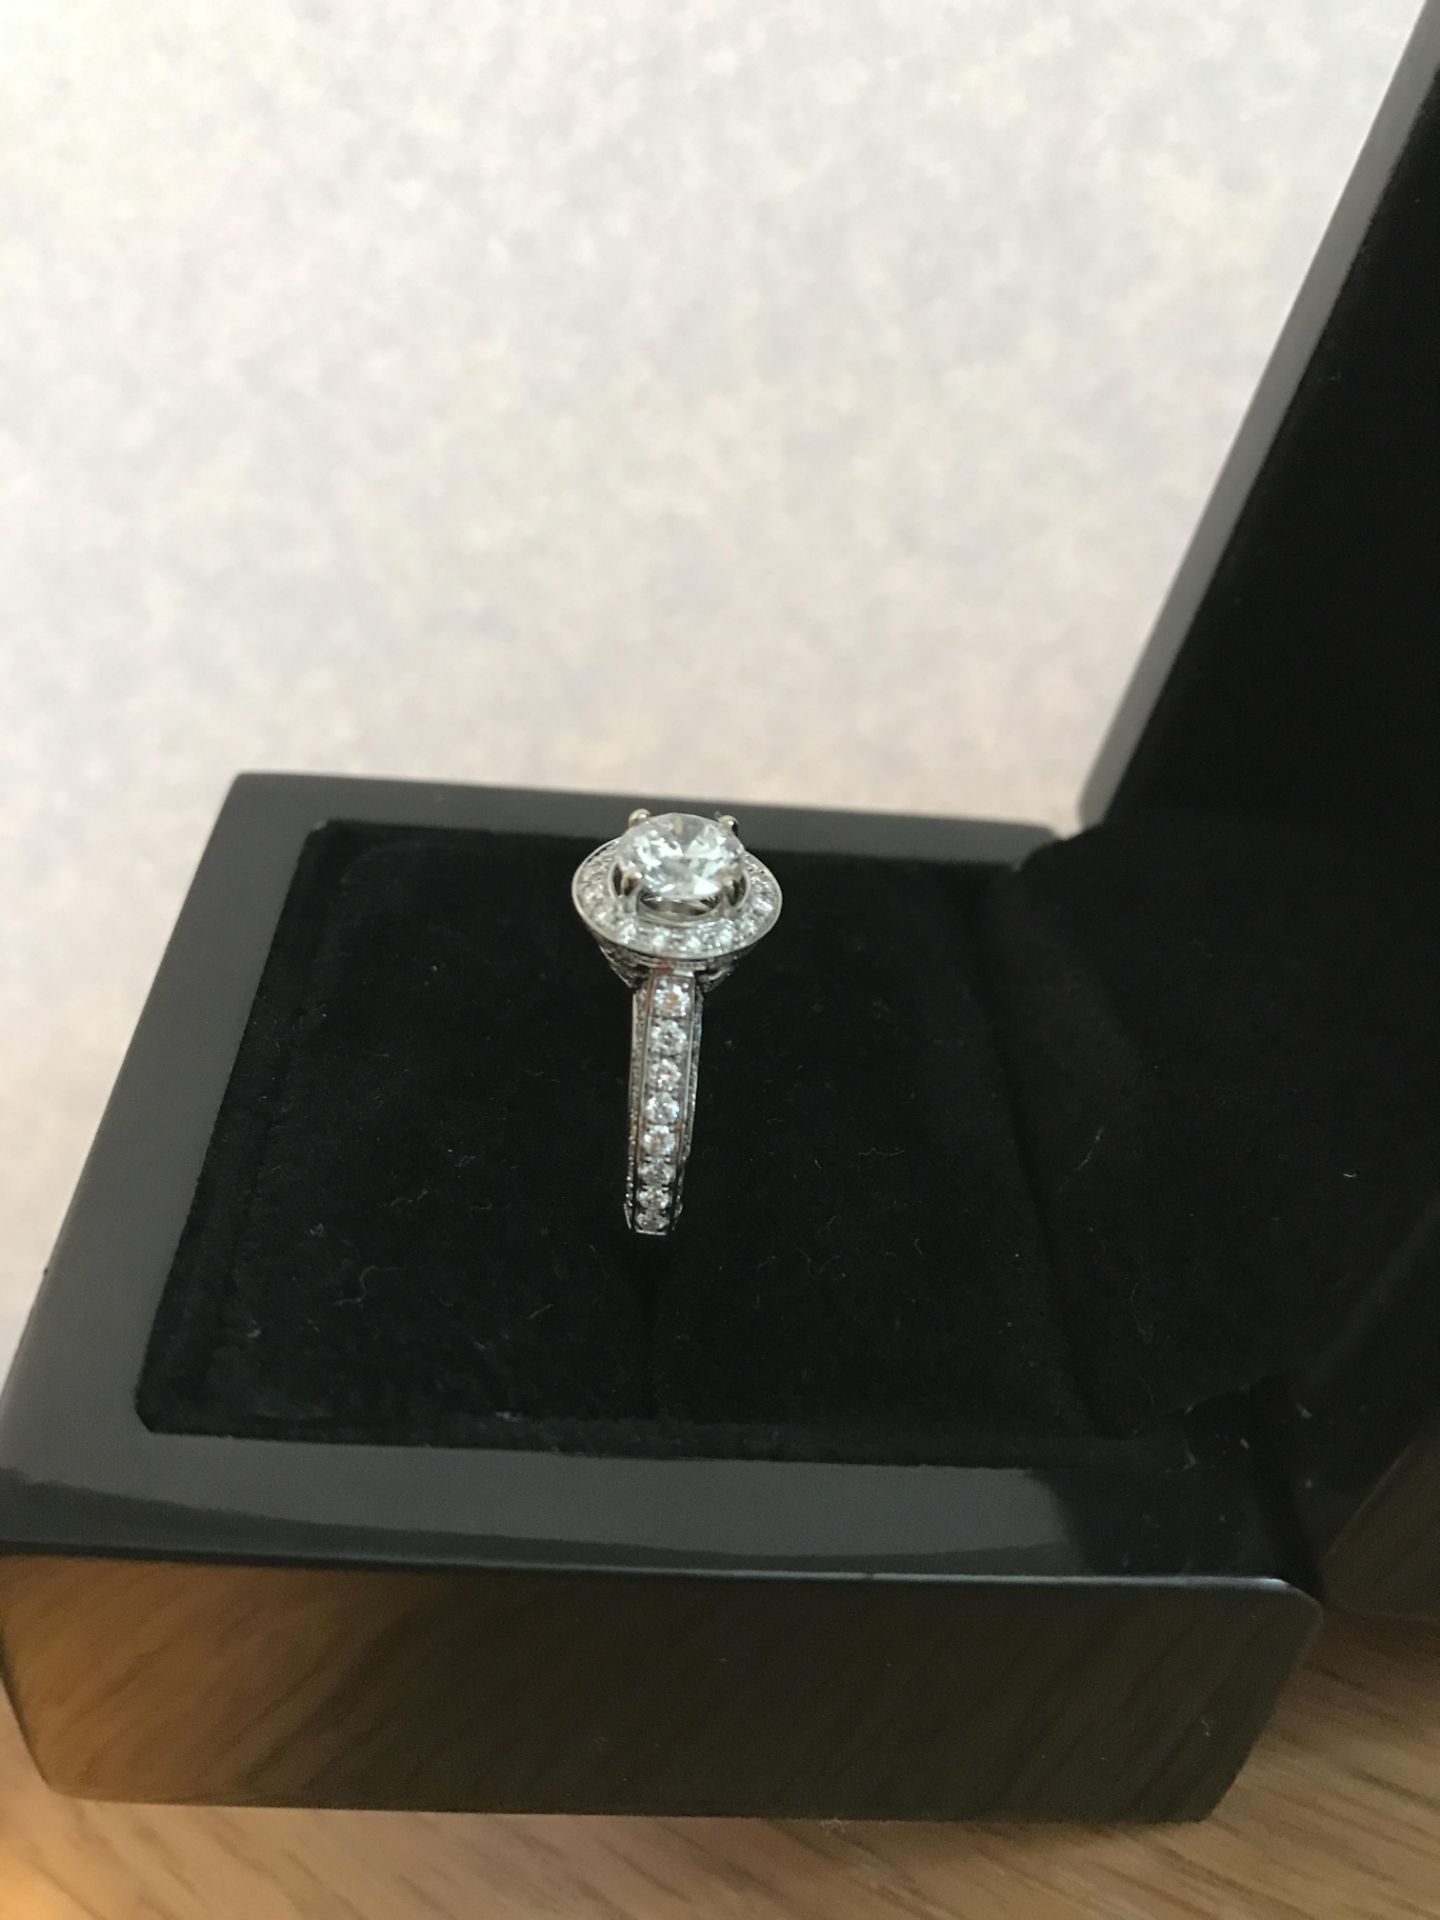 18 Carat White Gold Diamond Engagement Ring - Unworn 10/10 Condition - Image 13 of 18